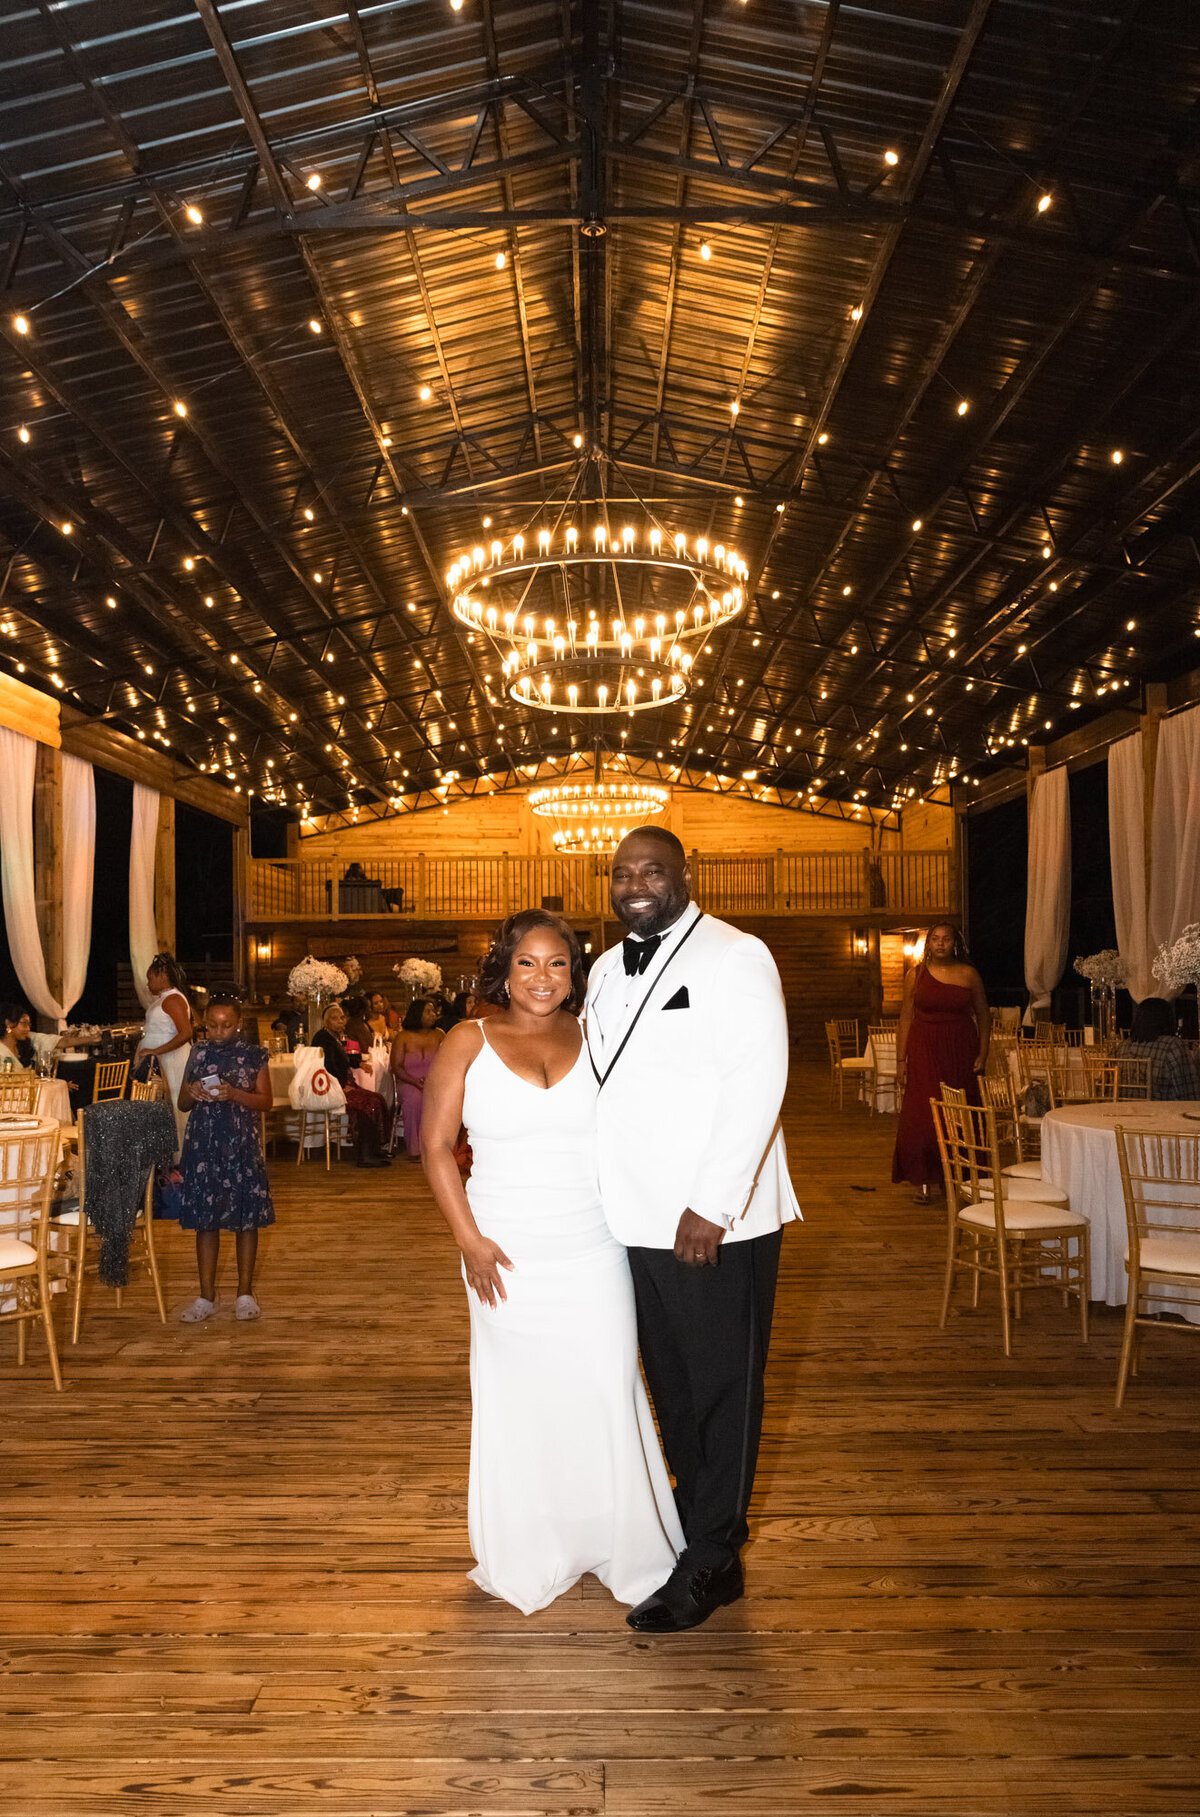 Michael and Mishka-Wedding-Green Cabin Ranch-Astatula, FL-FL Wedding Photographer-Orlando Photographer-Emily Pillon Photography-S-120423-491